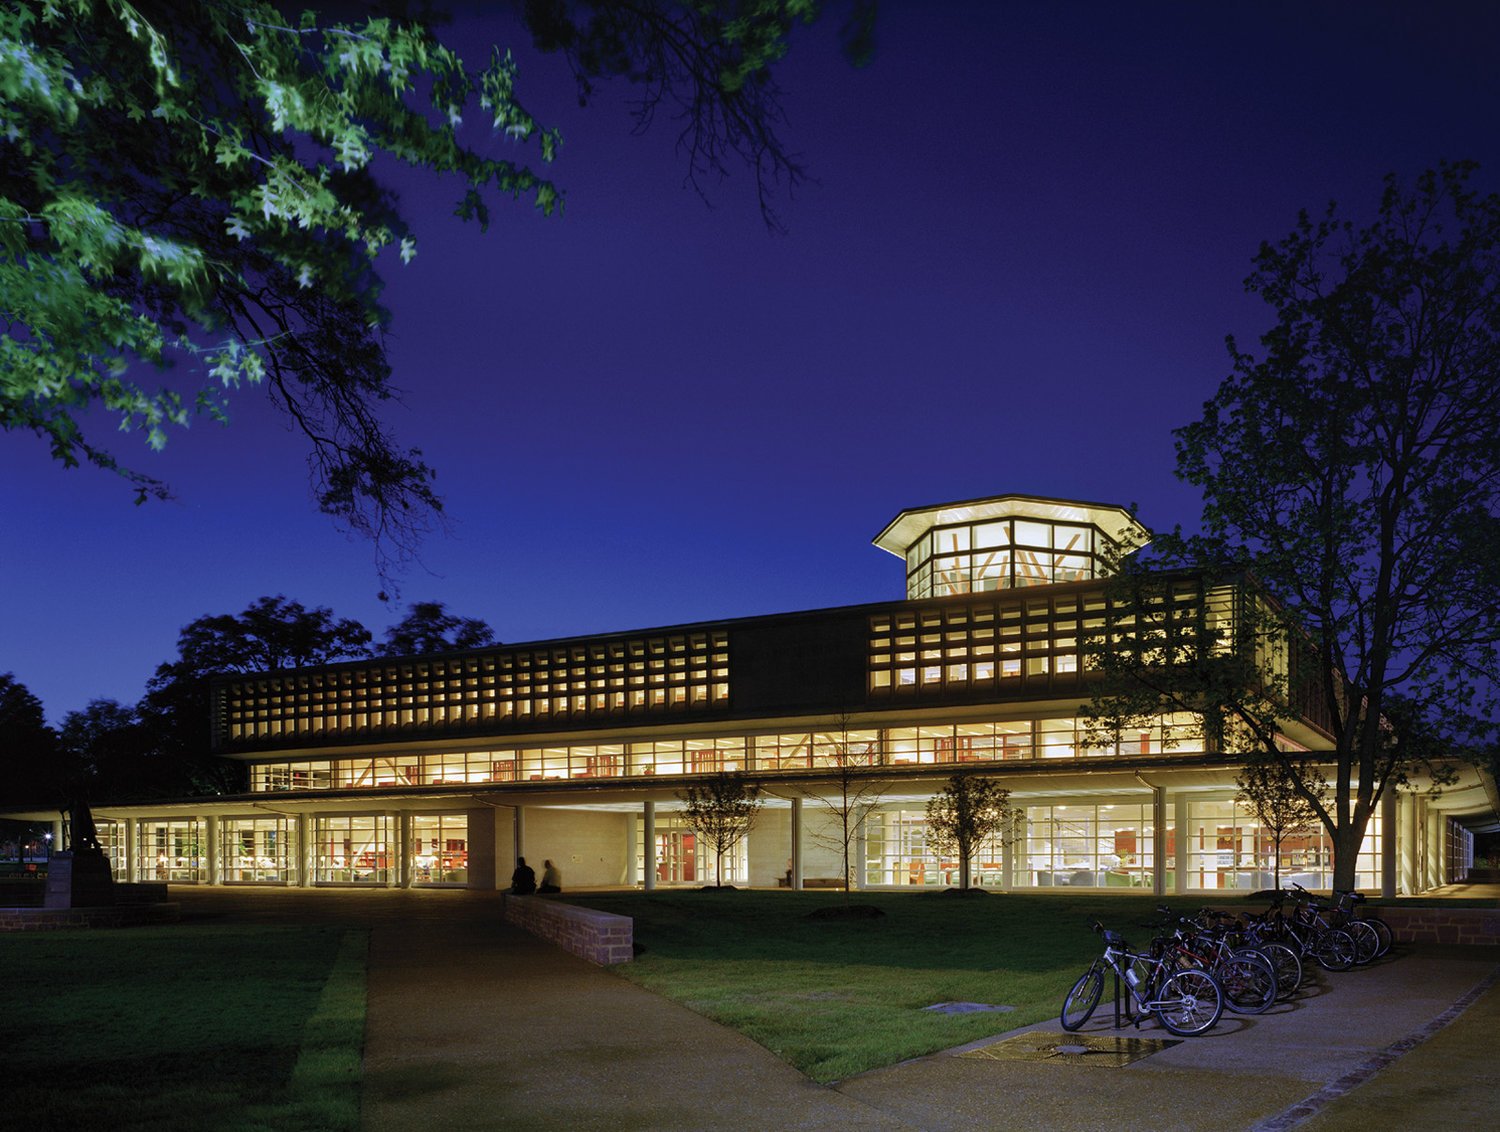 Washington University in St. Louis, John M. Olin Library, St. Louis, MO